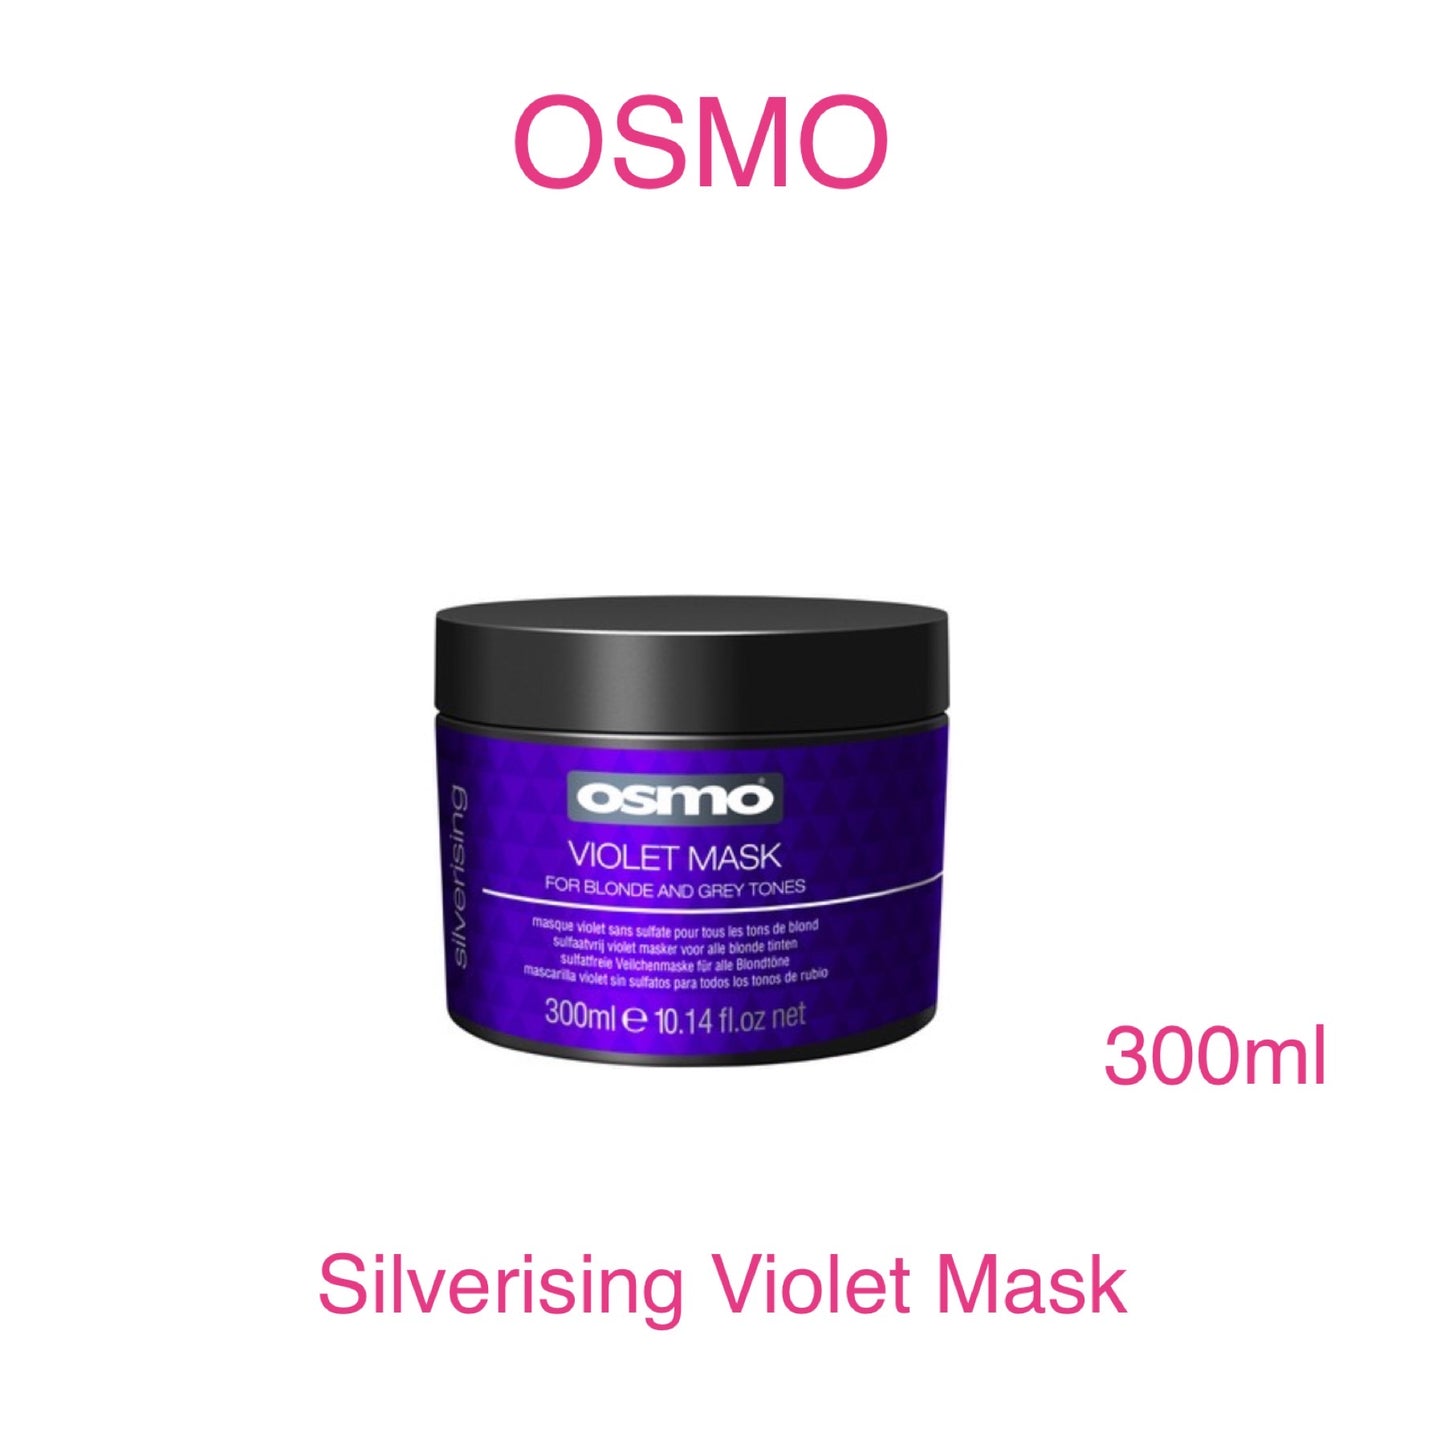 Osmo Silverising Violet Mask